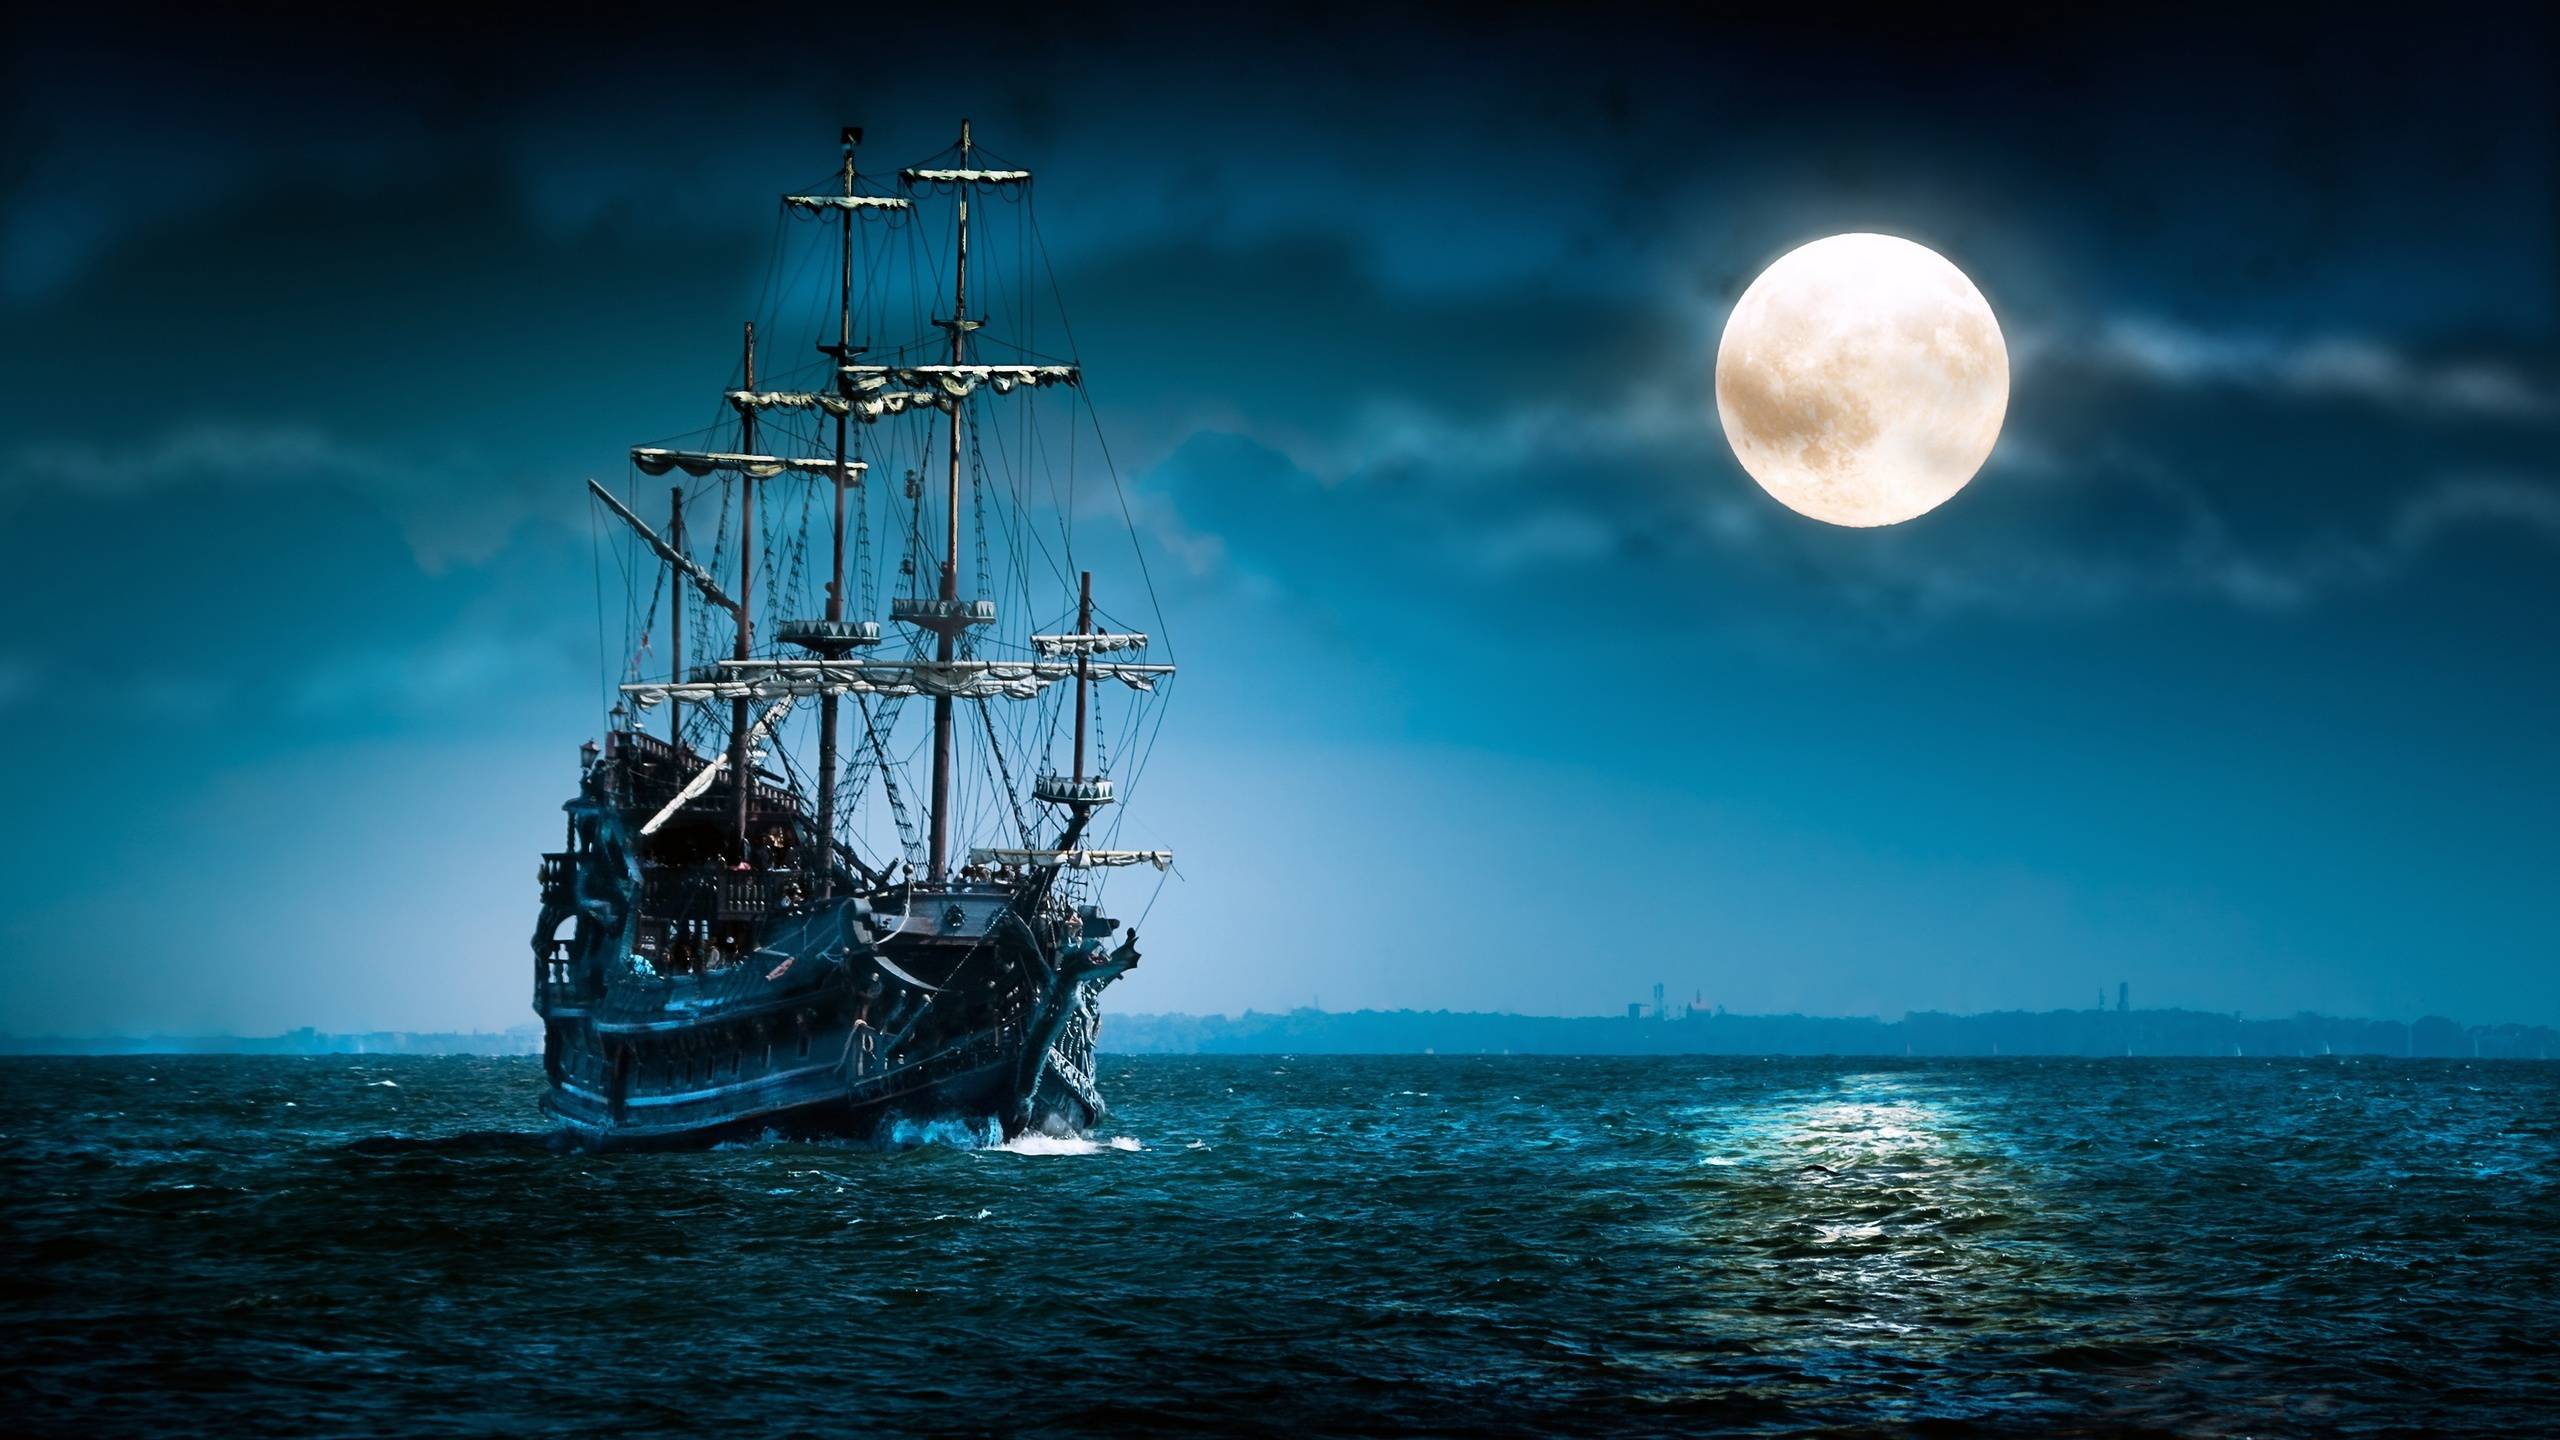 Navigating Under The Moonlight Night Wallpaper 2560x1440 px Free